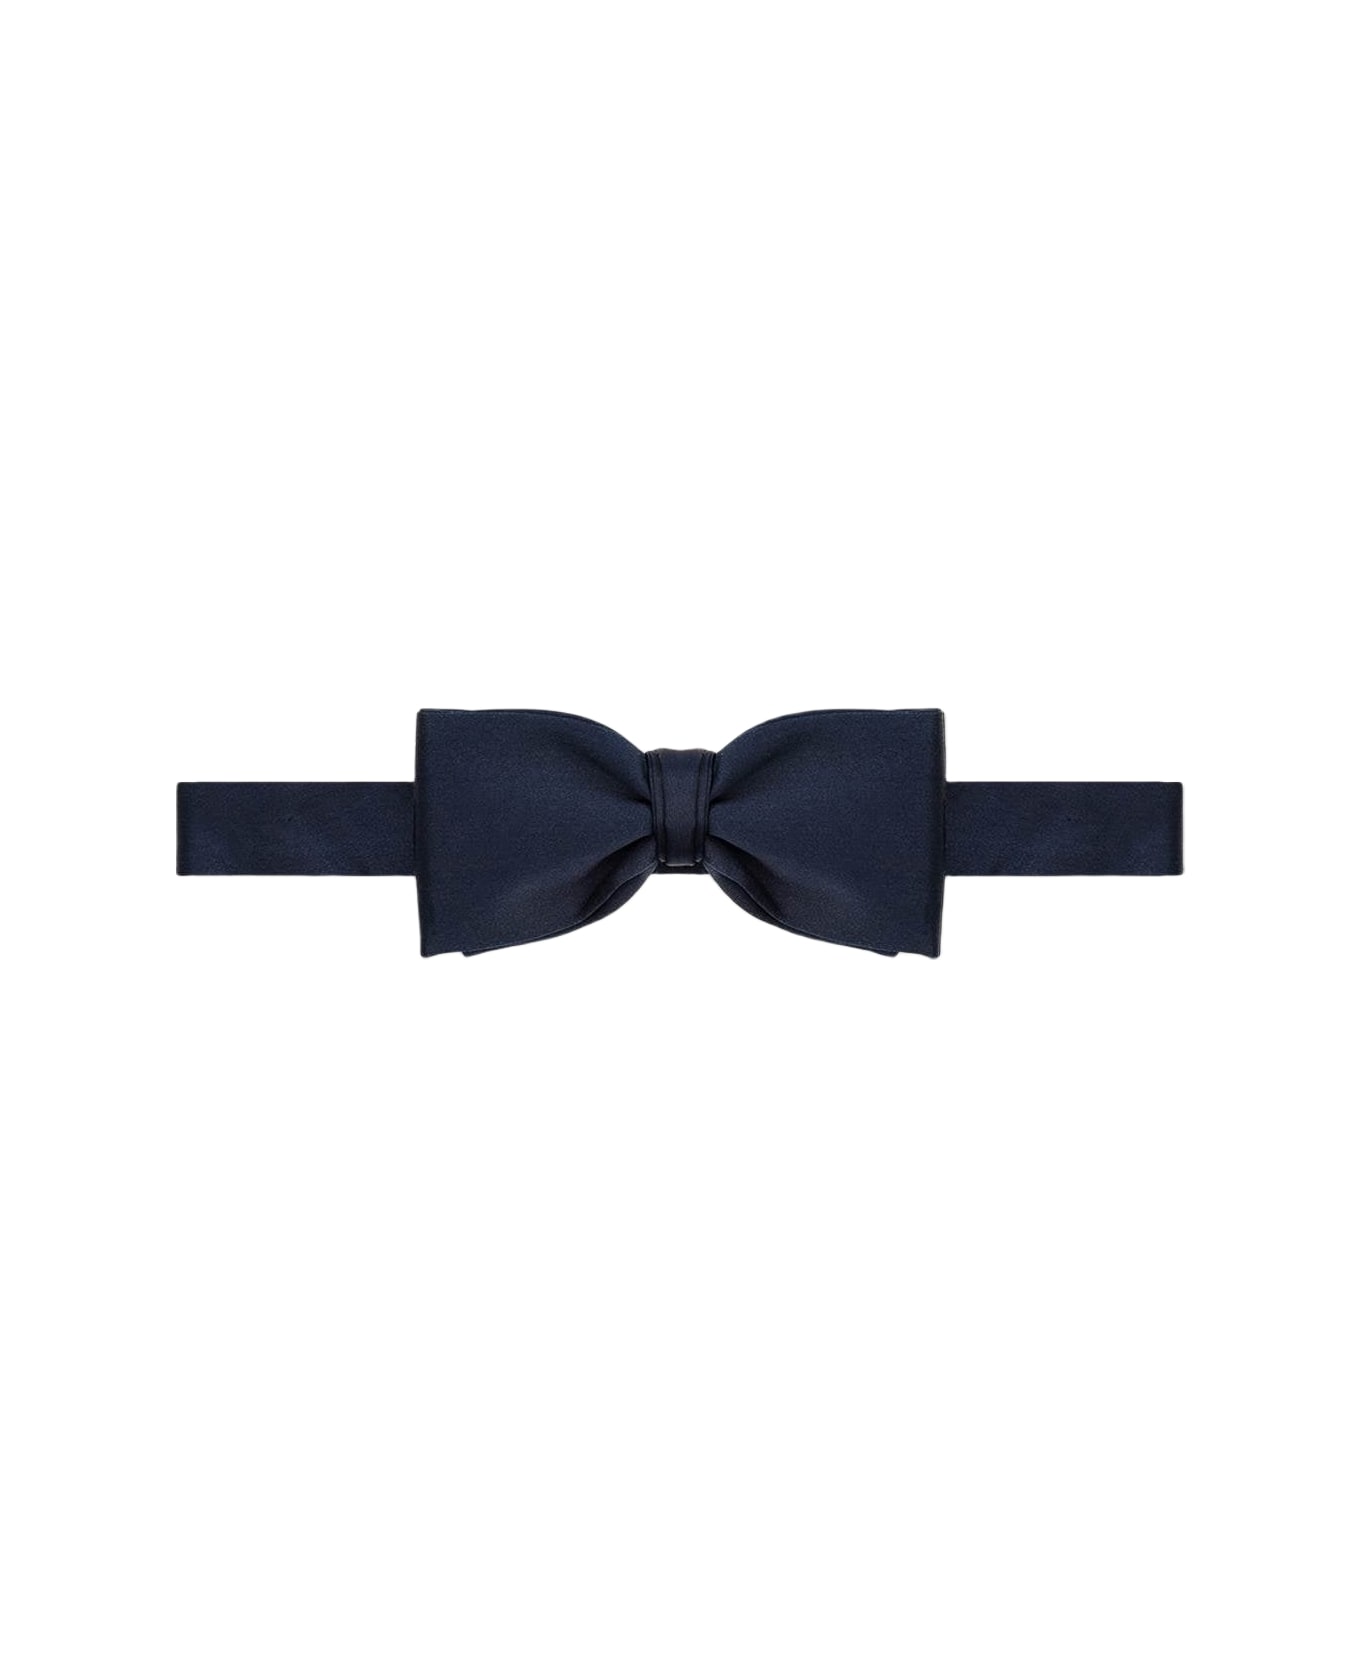 Larusmiani Bow Tie For Tuxedo Tie - Blue ネクタイ